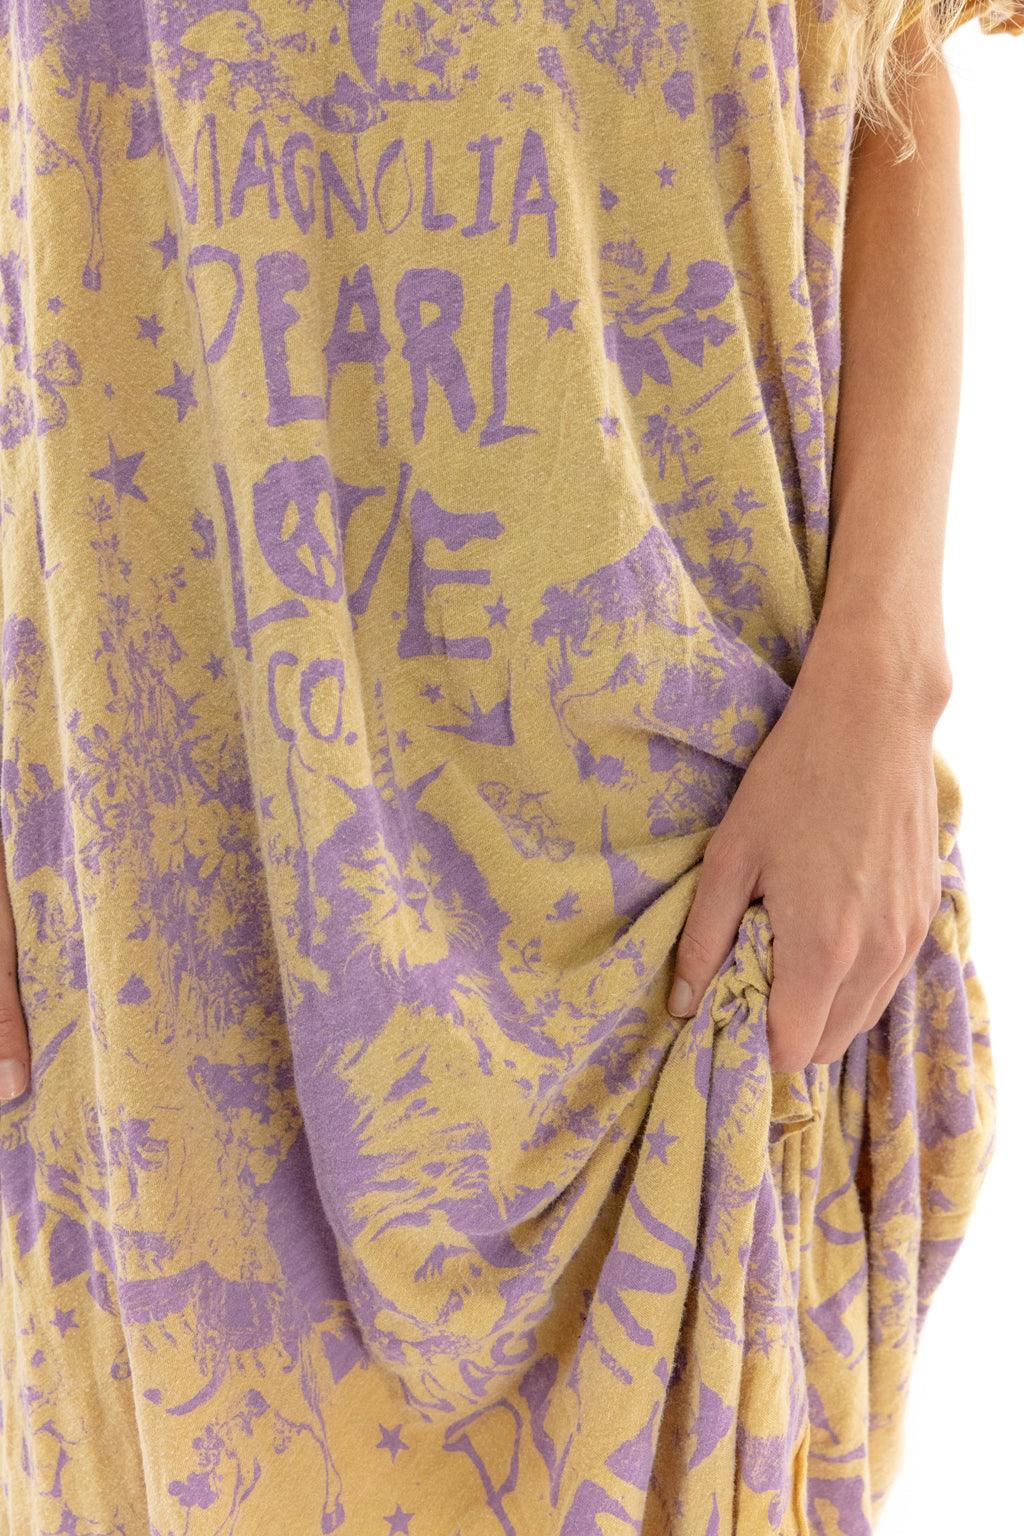 MP Love Co. Unicat T Dress - Magnolia Pearl Clothing